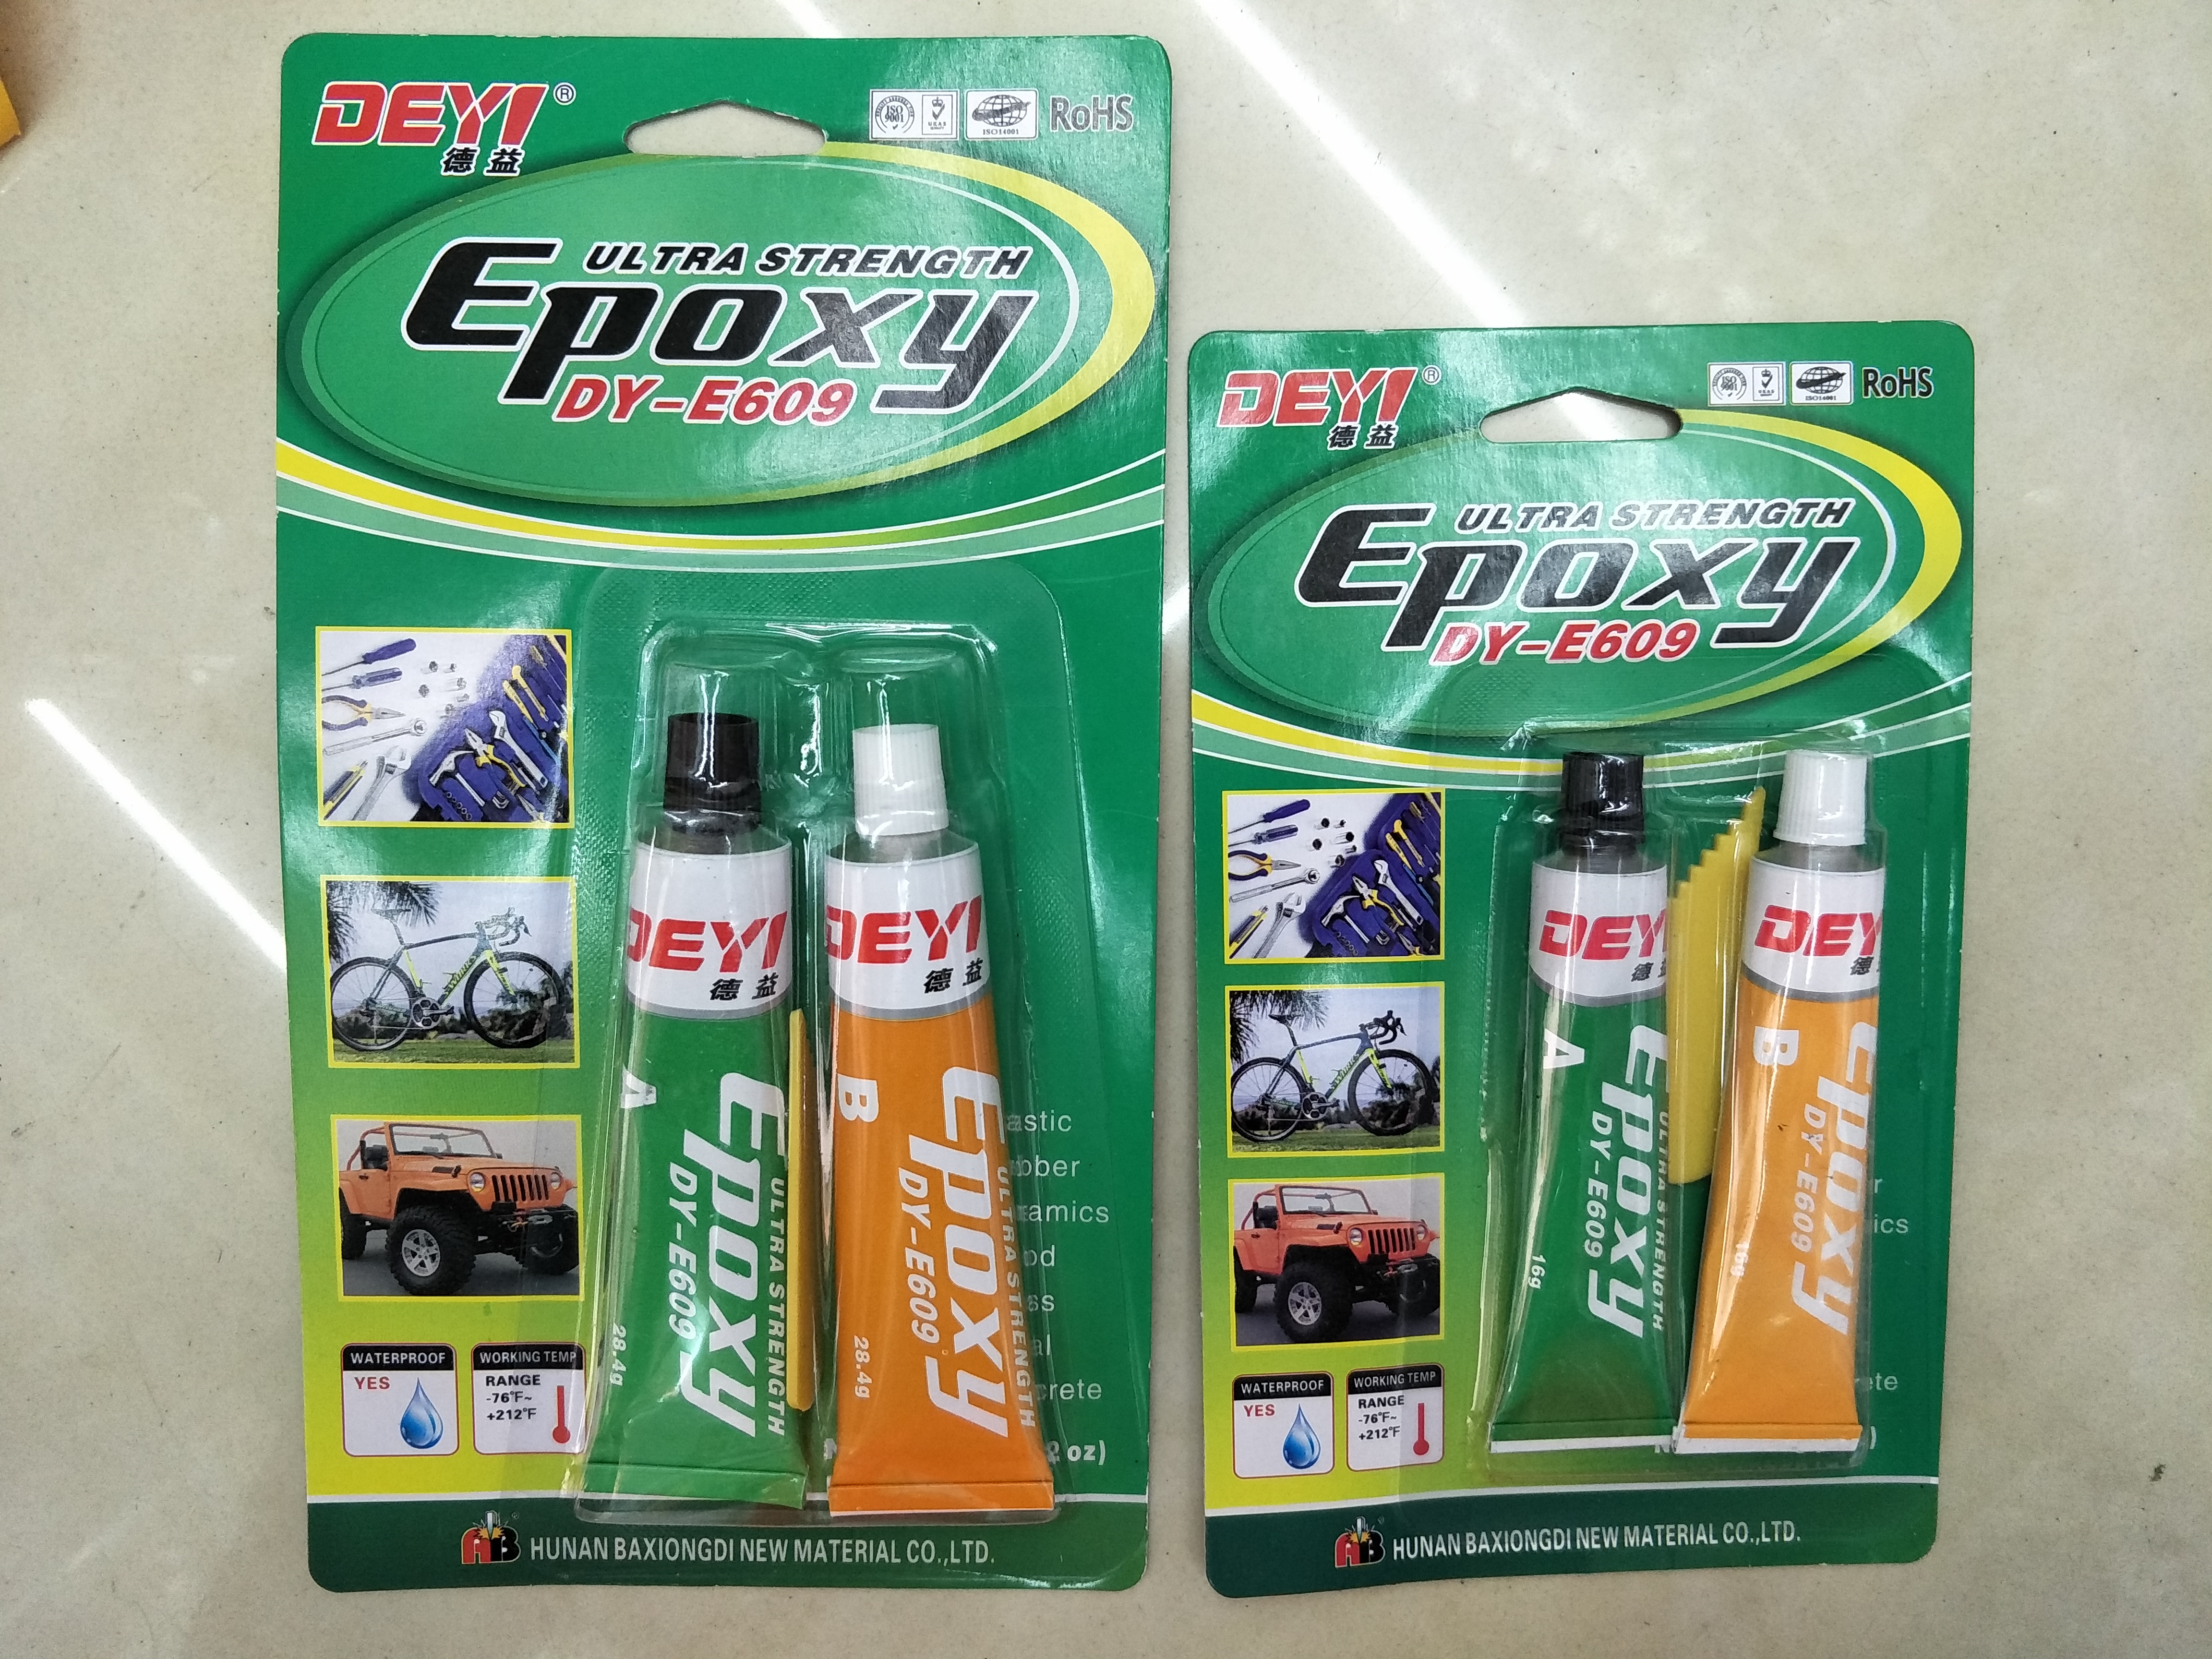 AB Glue Epoxy Glue The manufacturer sells DEYI new 40 kka with epoxy AB glue.EPOXY GLUE